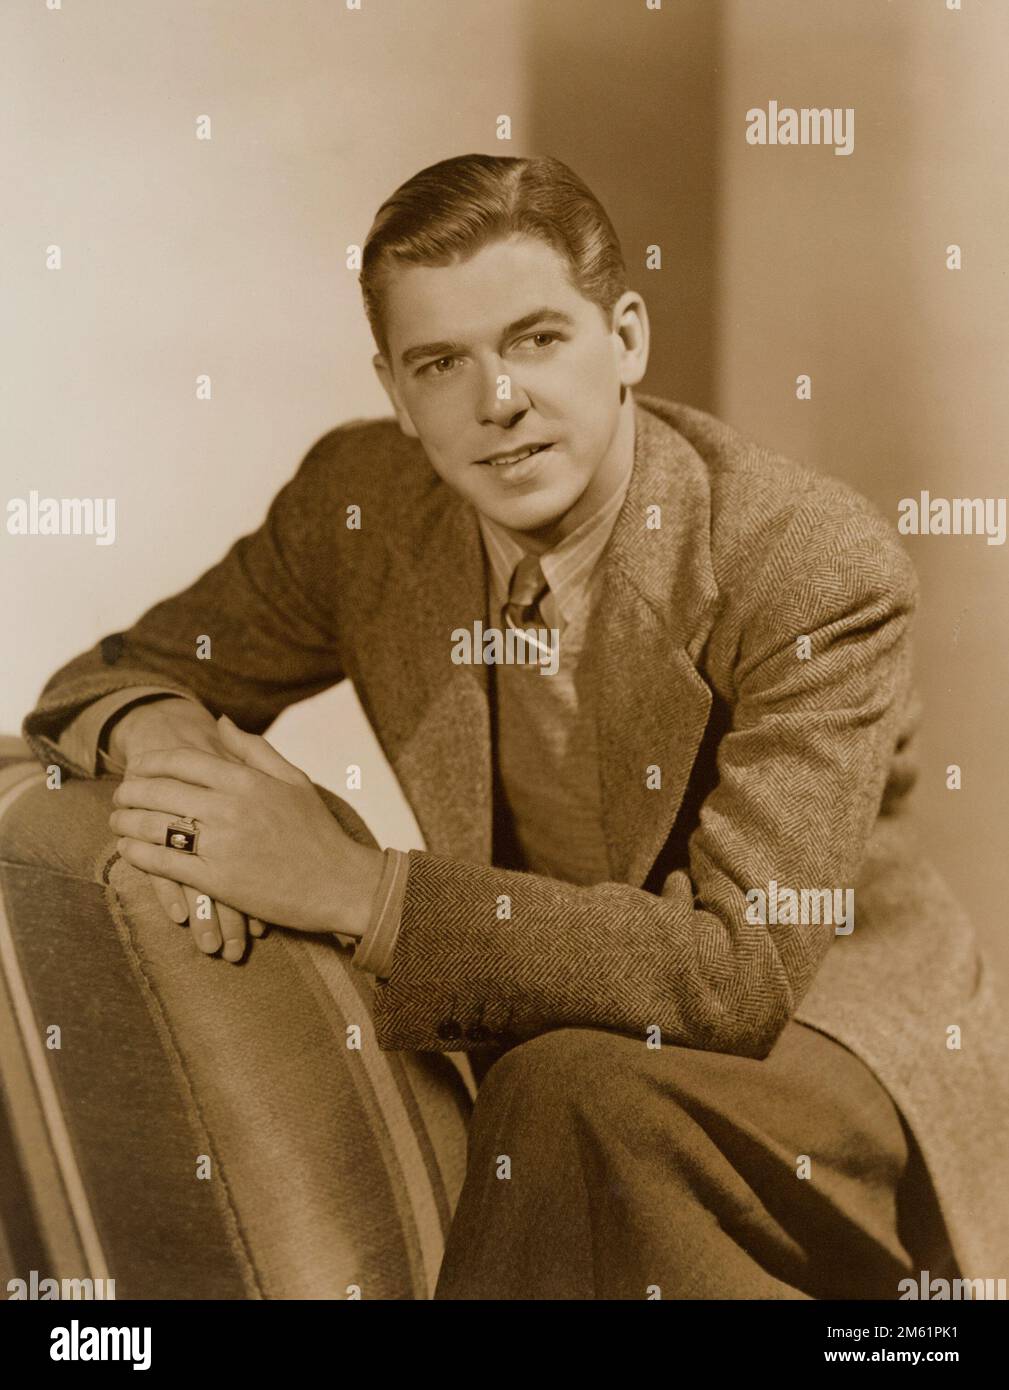 Ronald Reagan c 1940 (The actor years) sepia Stock Photo